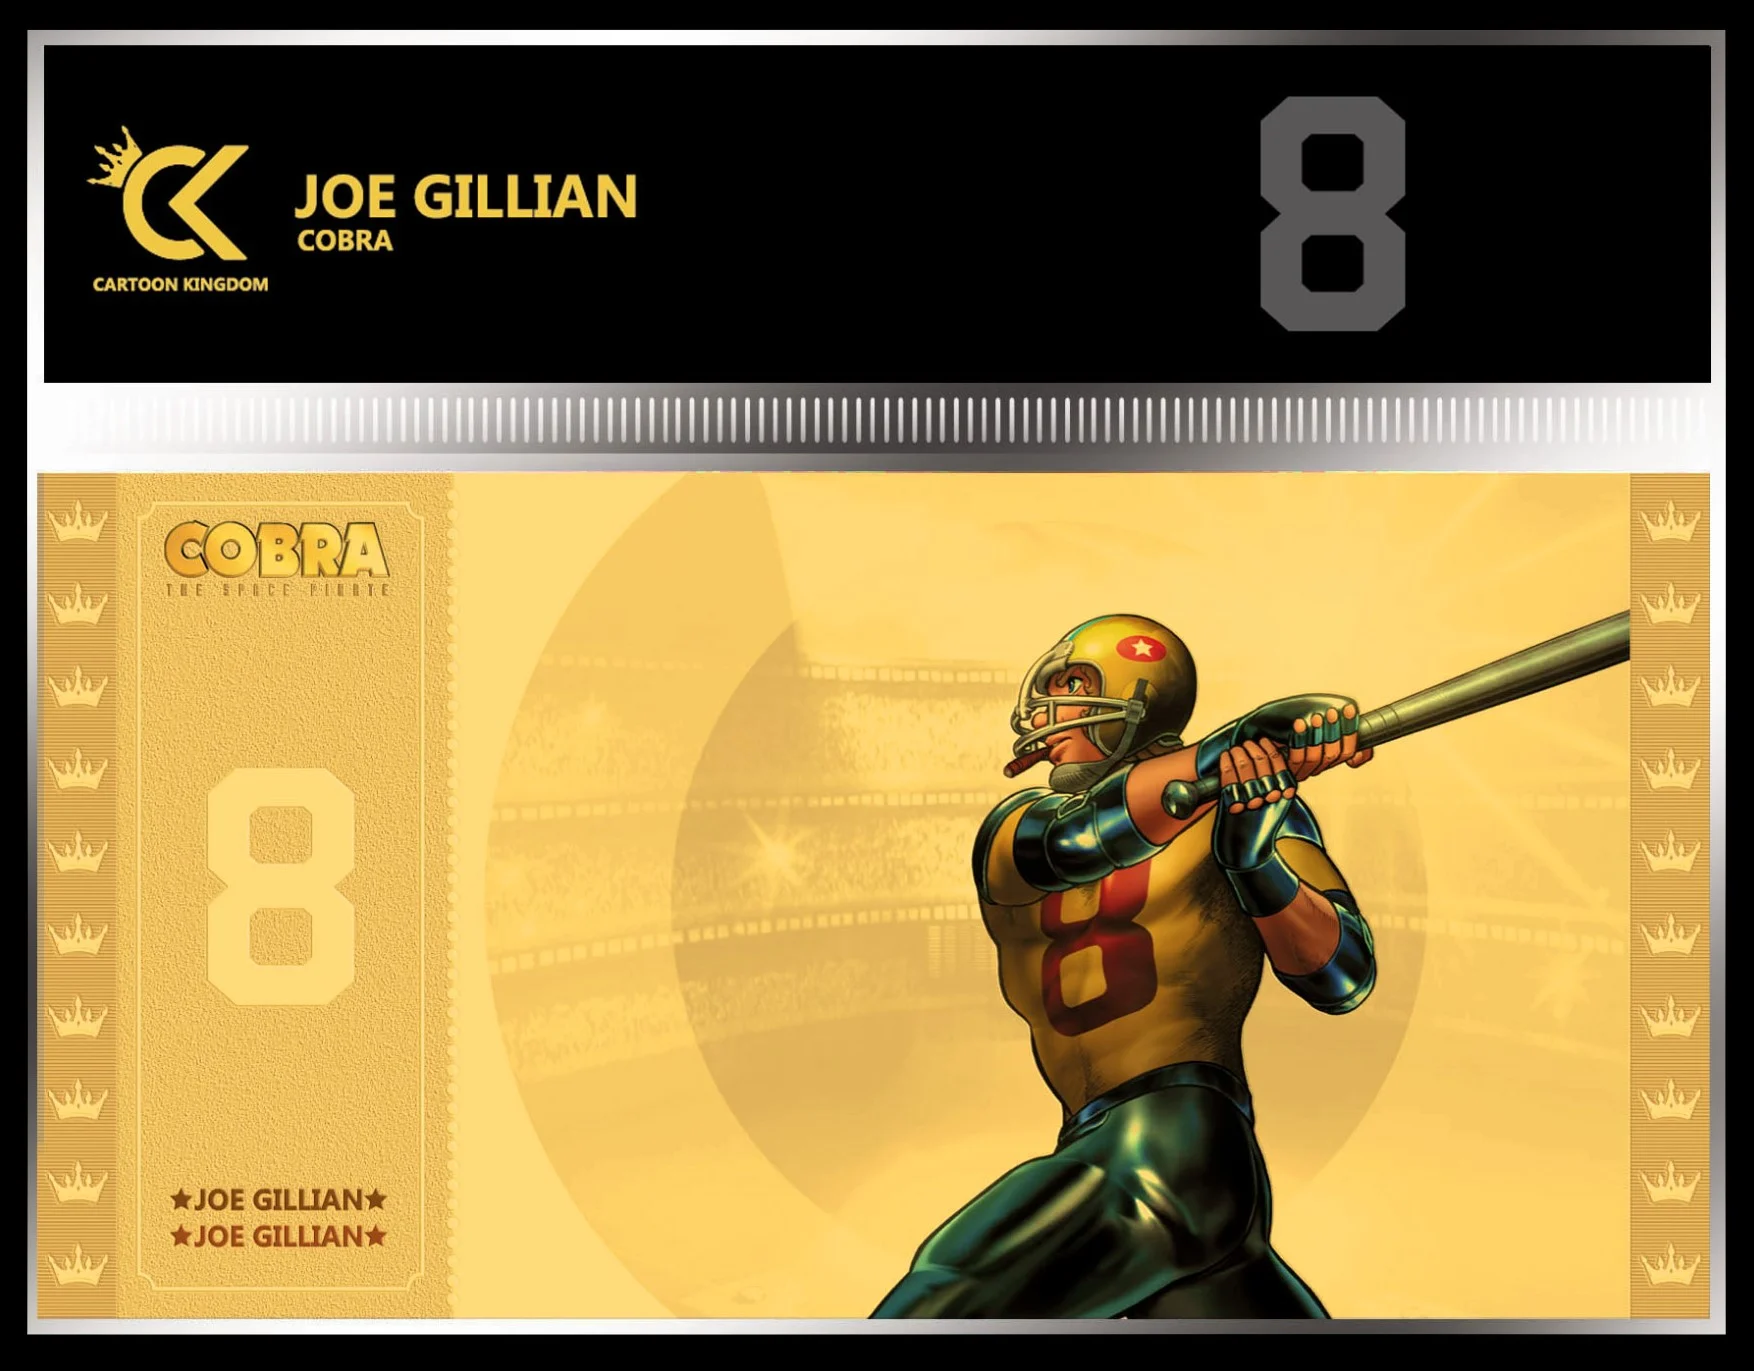 COBRA - Joe Gillian - Golden Ticket CK-CO04